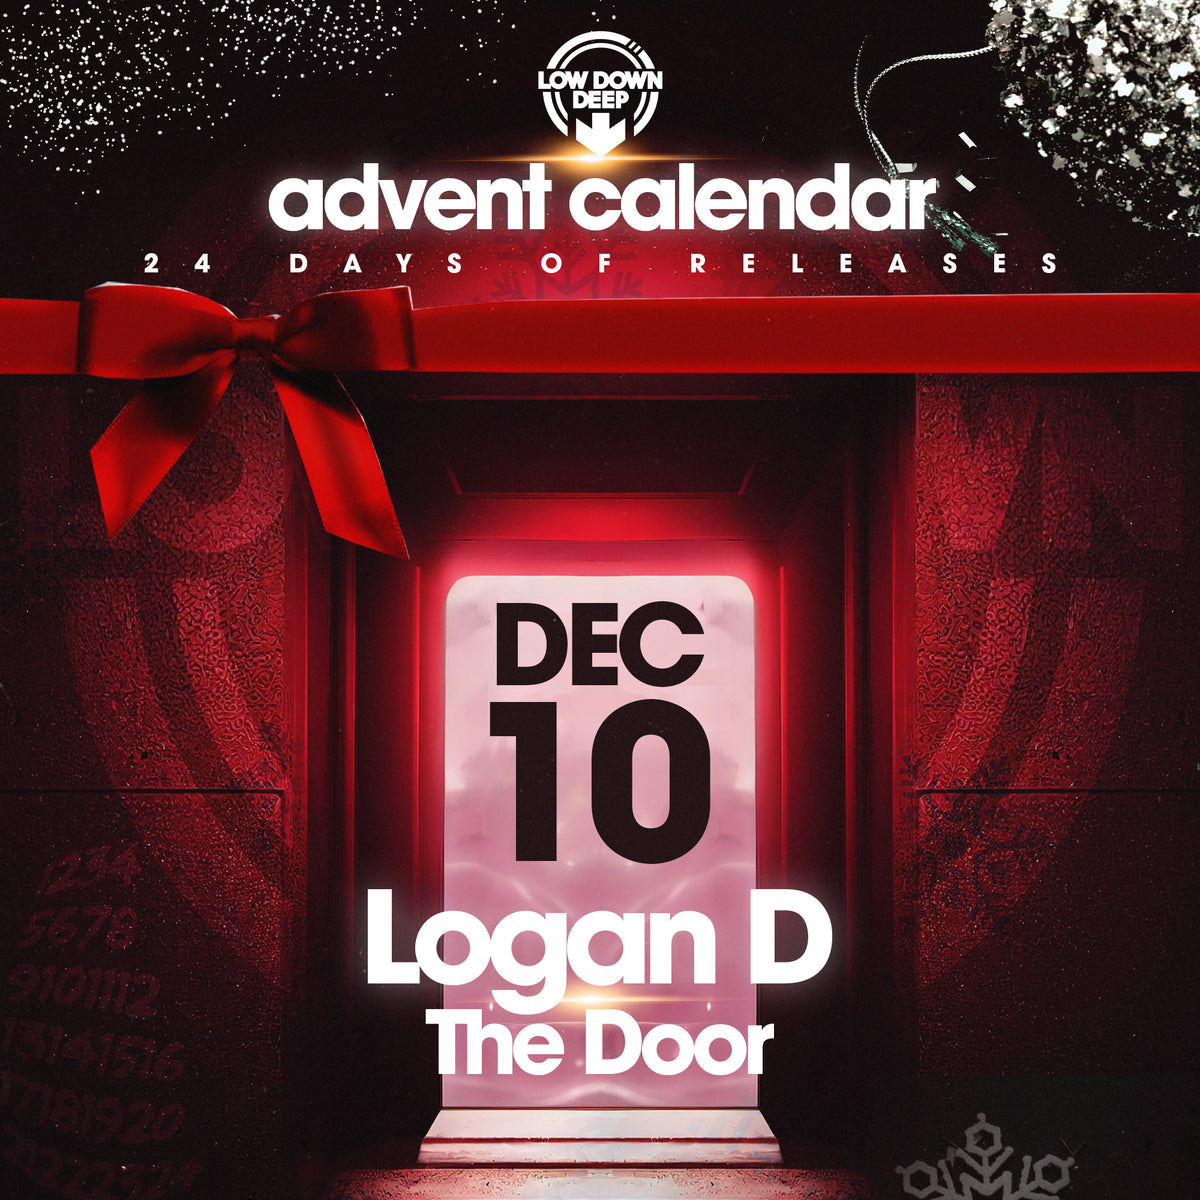 LDDRADV010 - Logan D 'The Door'